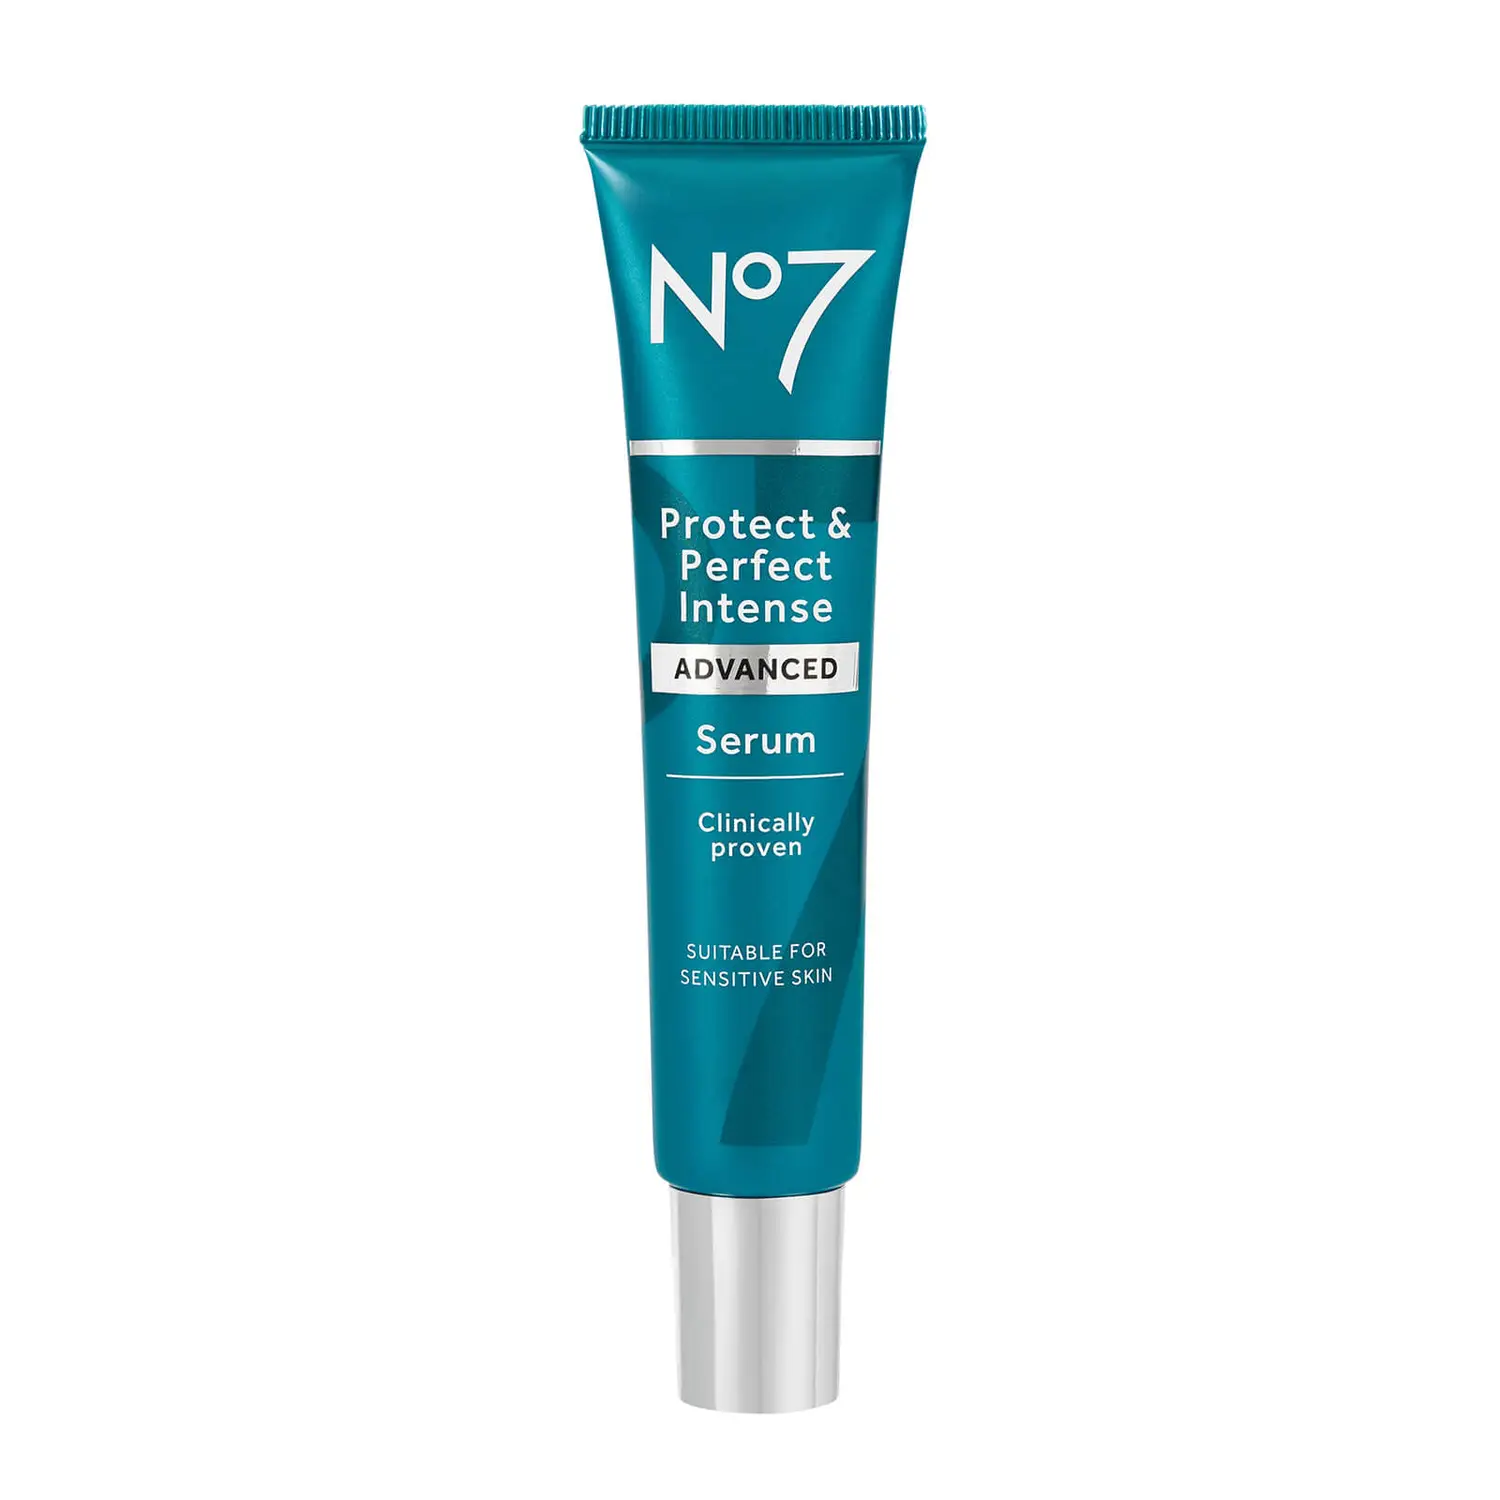 No7 Protect & Perfect Intense Advanced Anti Aging Serum